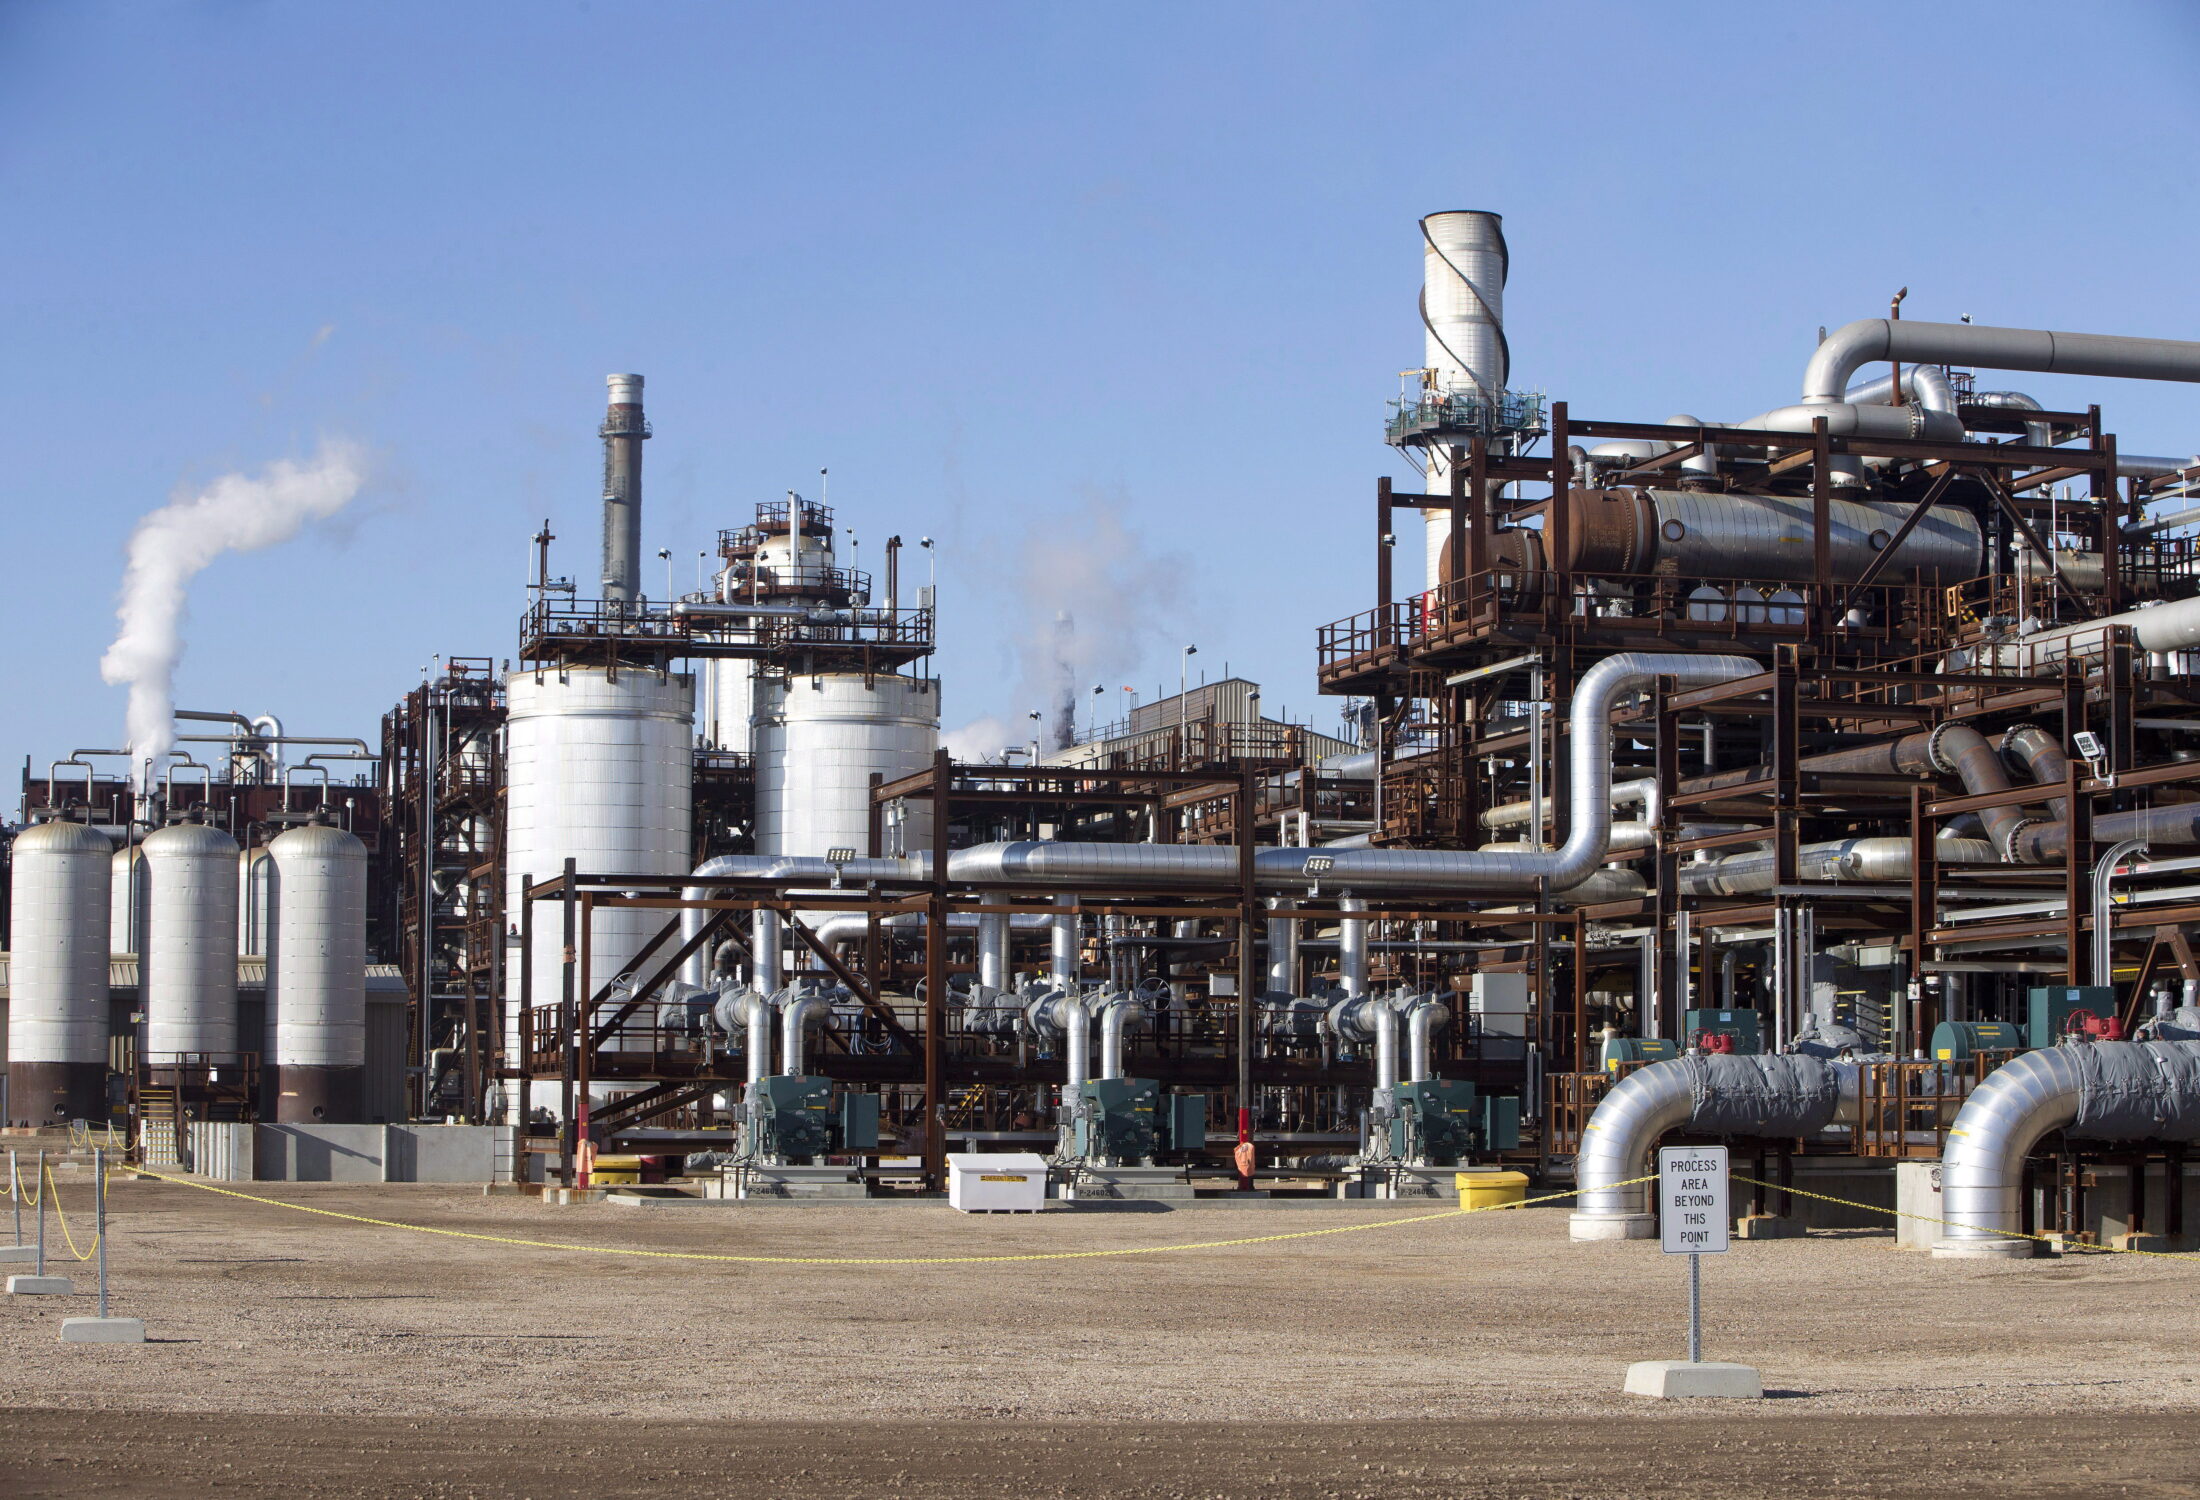 Quest carbon capture and storage facility in Fort Saskatchewan, Alta